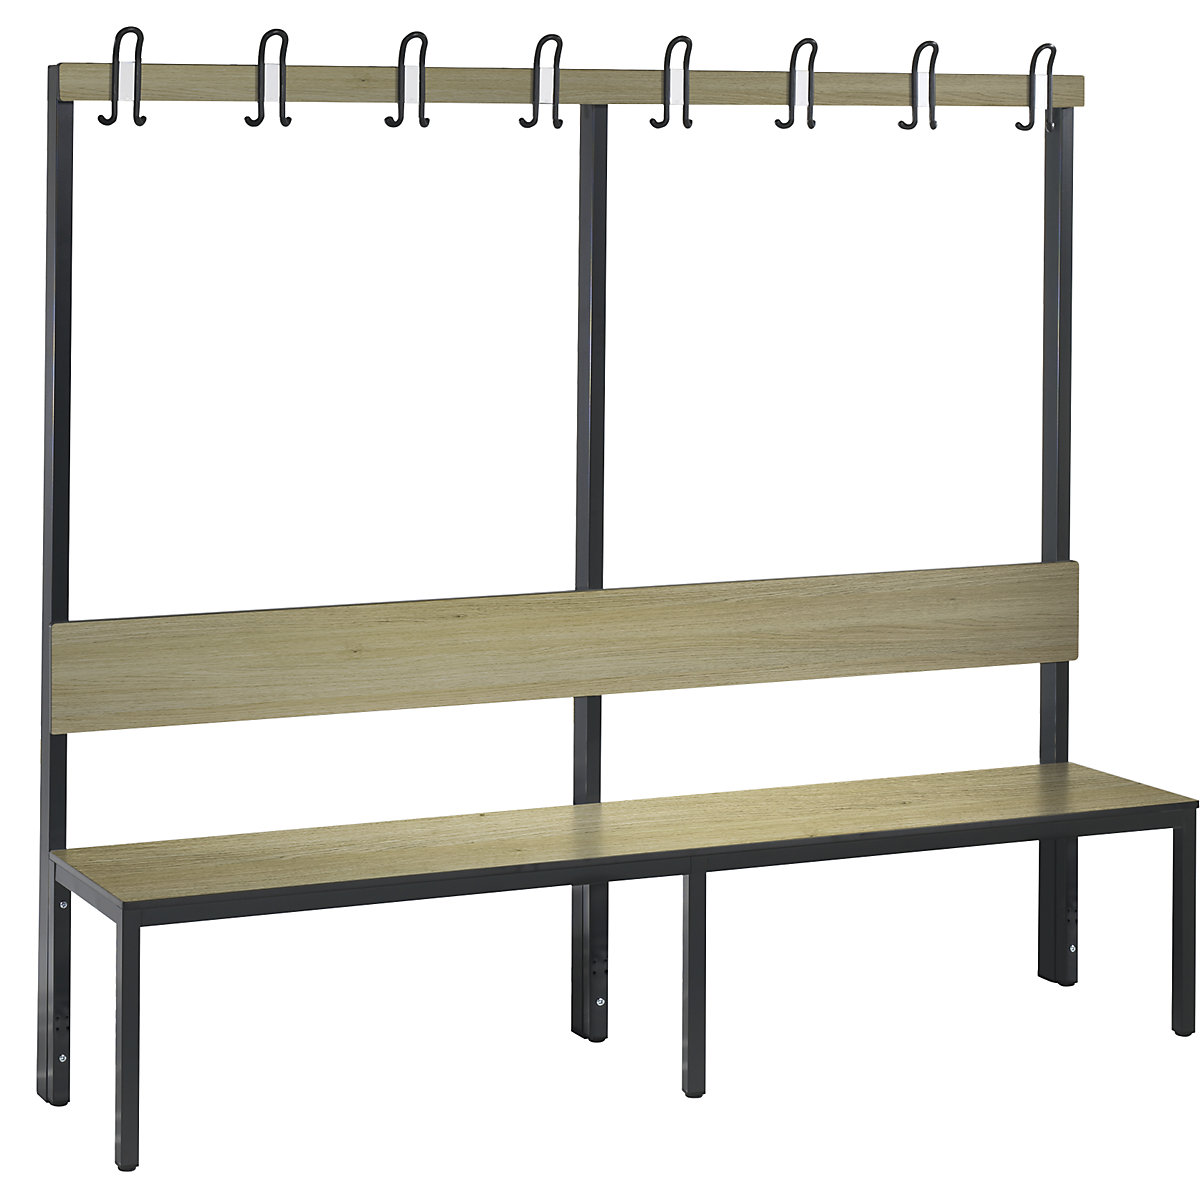 BASIC PLUS cloakroom bench, single sided – C+P, seat HPL, hook rail, length 1960 mm, oak finish-7